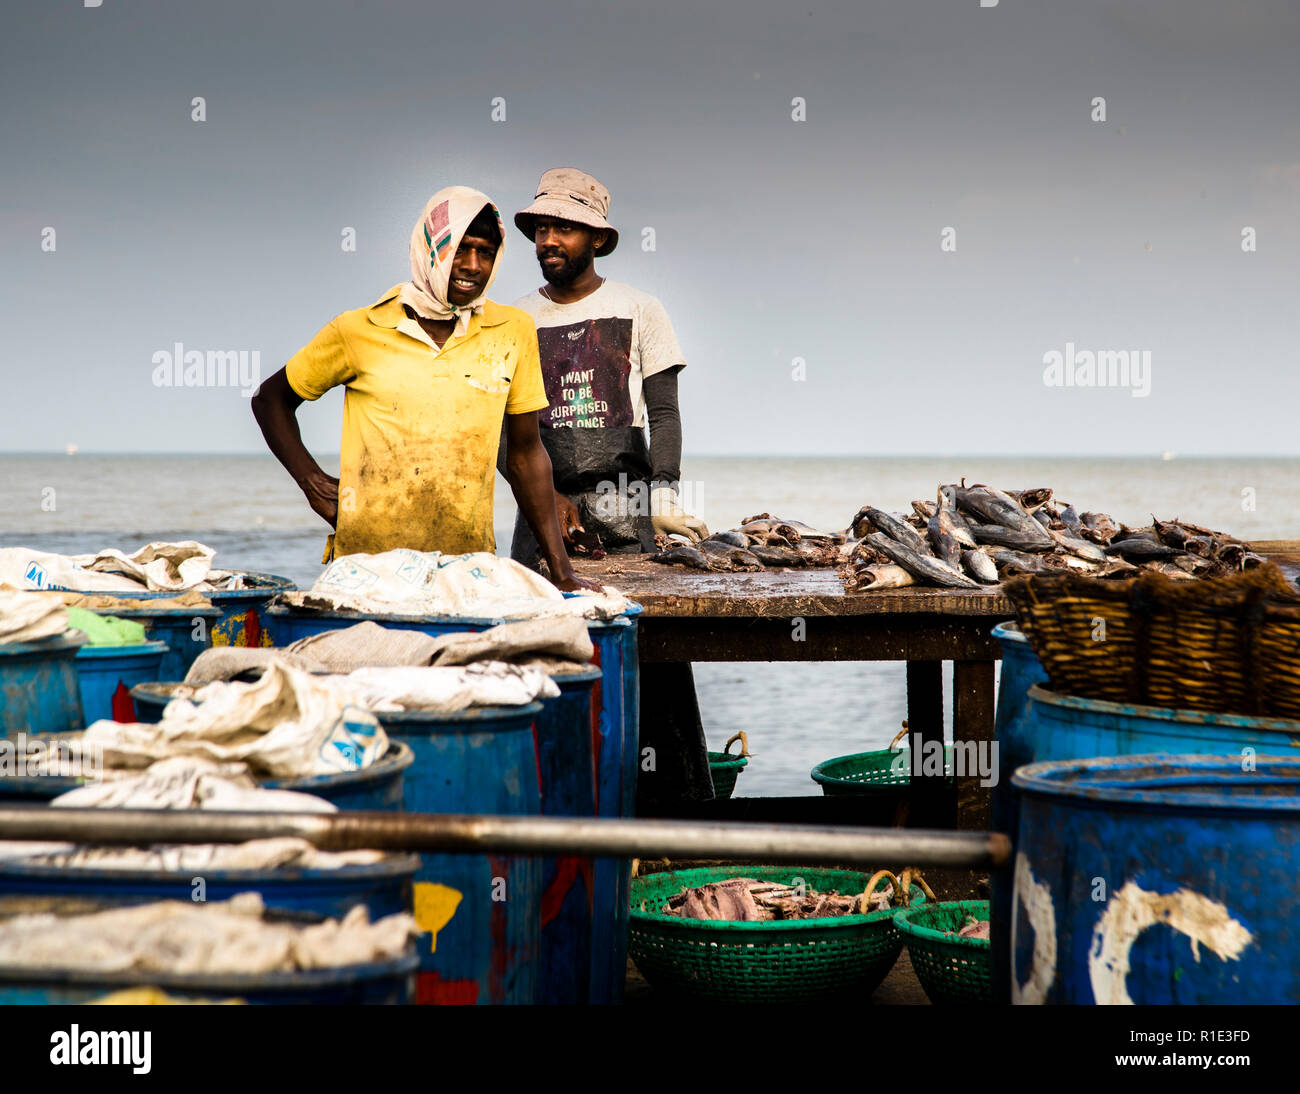 Fishing and salted fish production hot spot of Sri Lanka Stock Photo